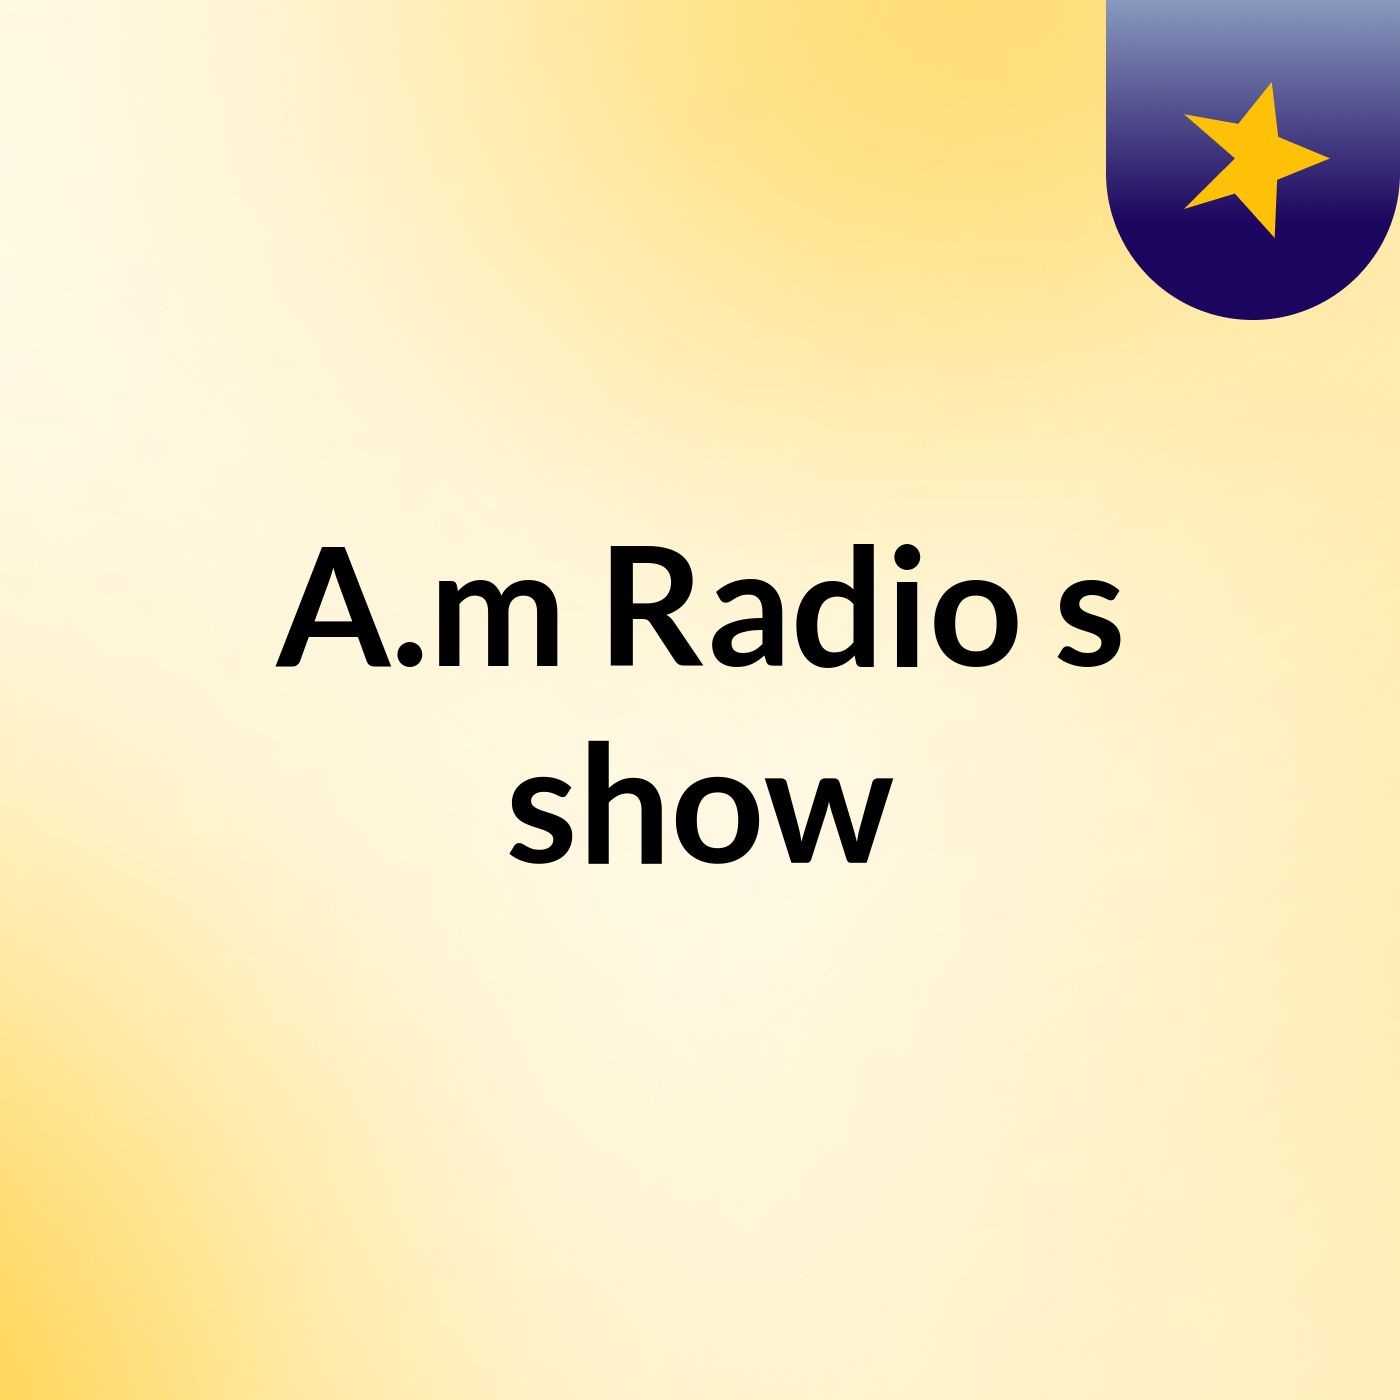 A.m Radio's show